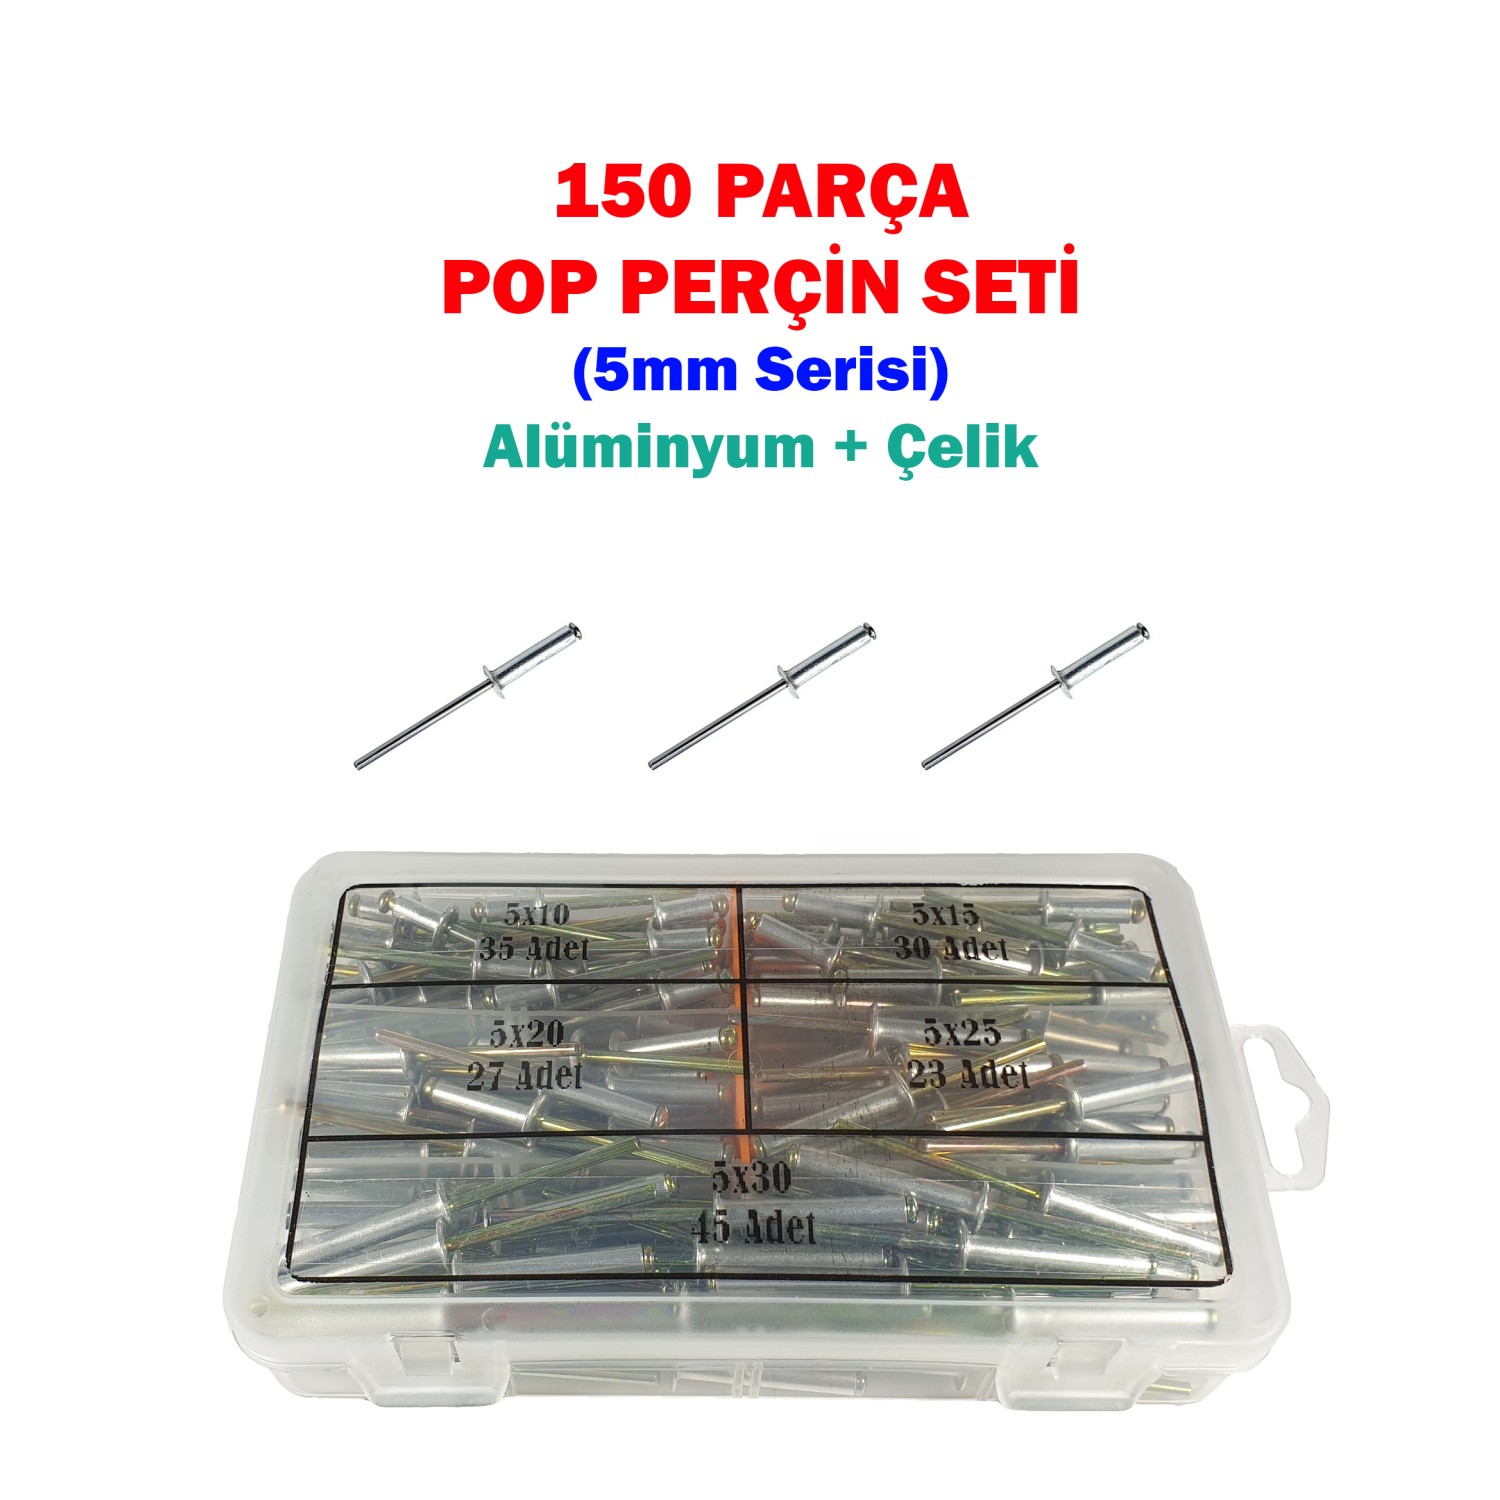 150 Parça Pop Perçin Seti - 5mm Serisi (Alüminyum + Çelik)